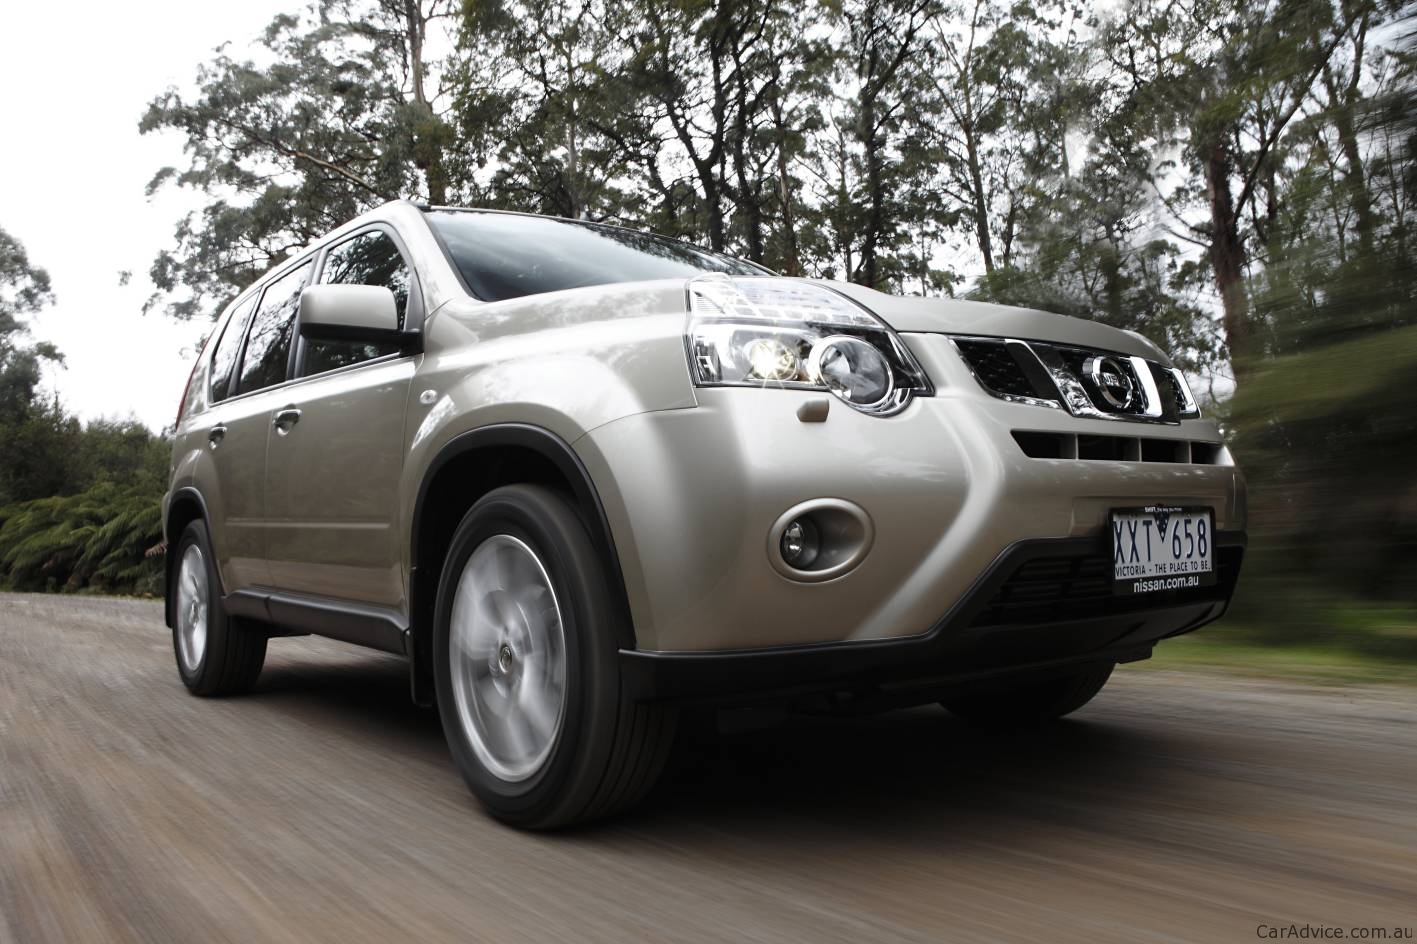 2010 Nissan x-trail review australia #4